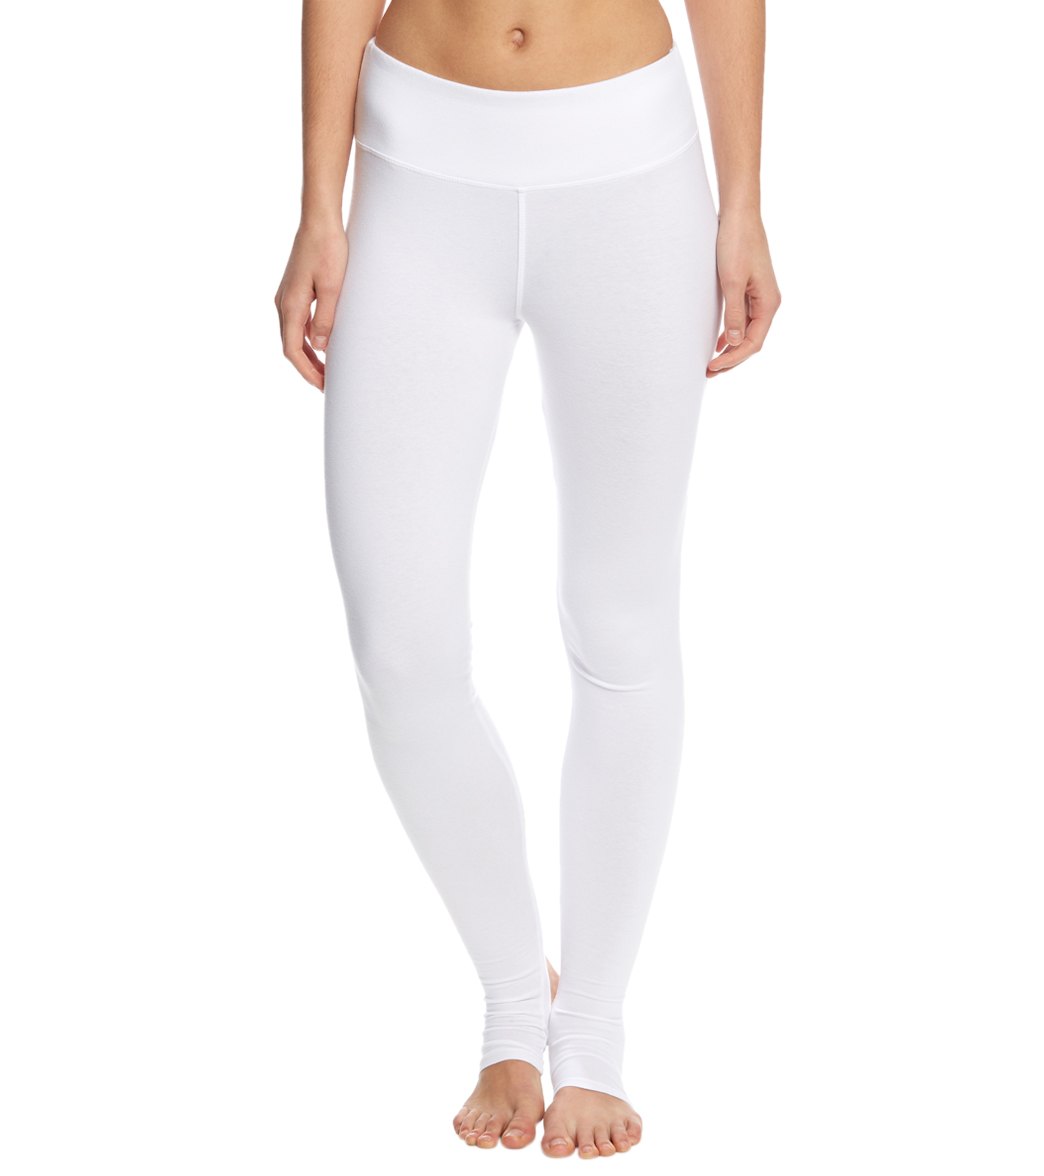 Allegra K Women's Elastic Waistband Soft Gym Yoga Cotton Stirrup Pants  Leggings Dark Grey Small : Target